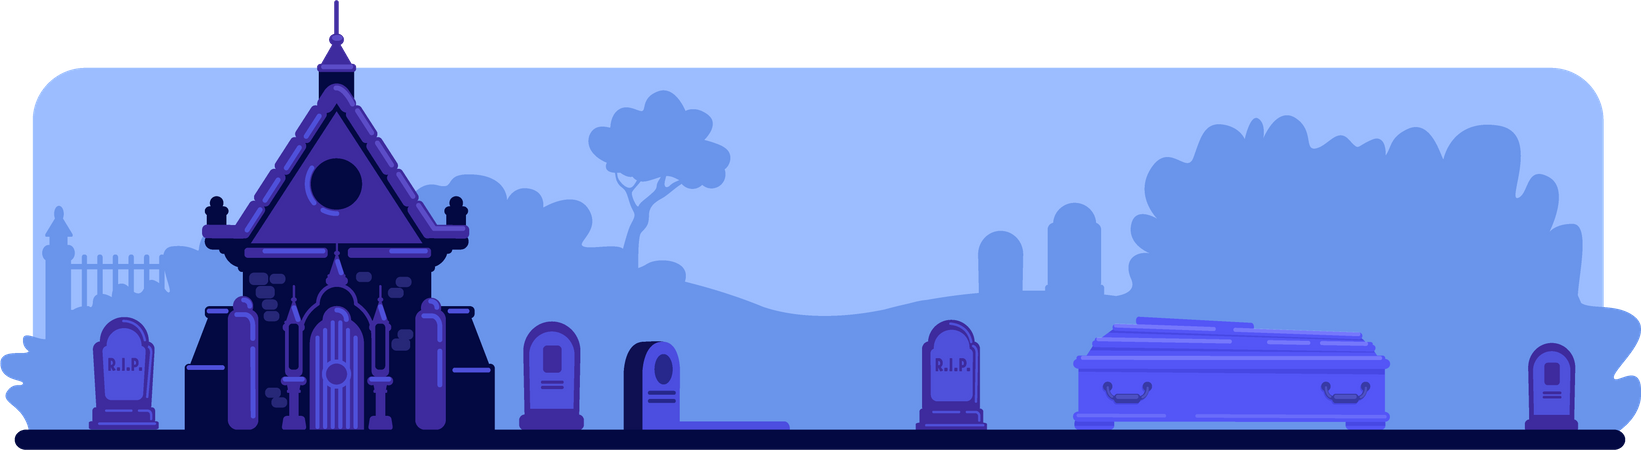 Night cemetery  Illustration